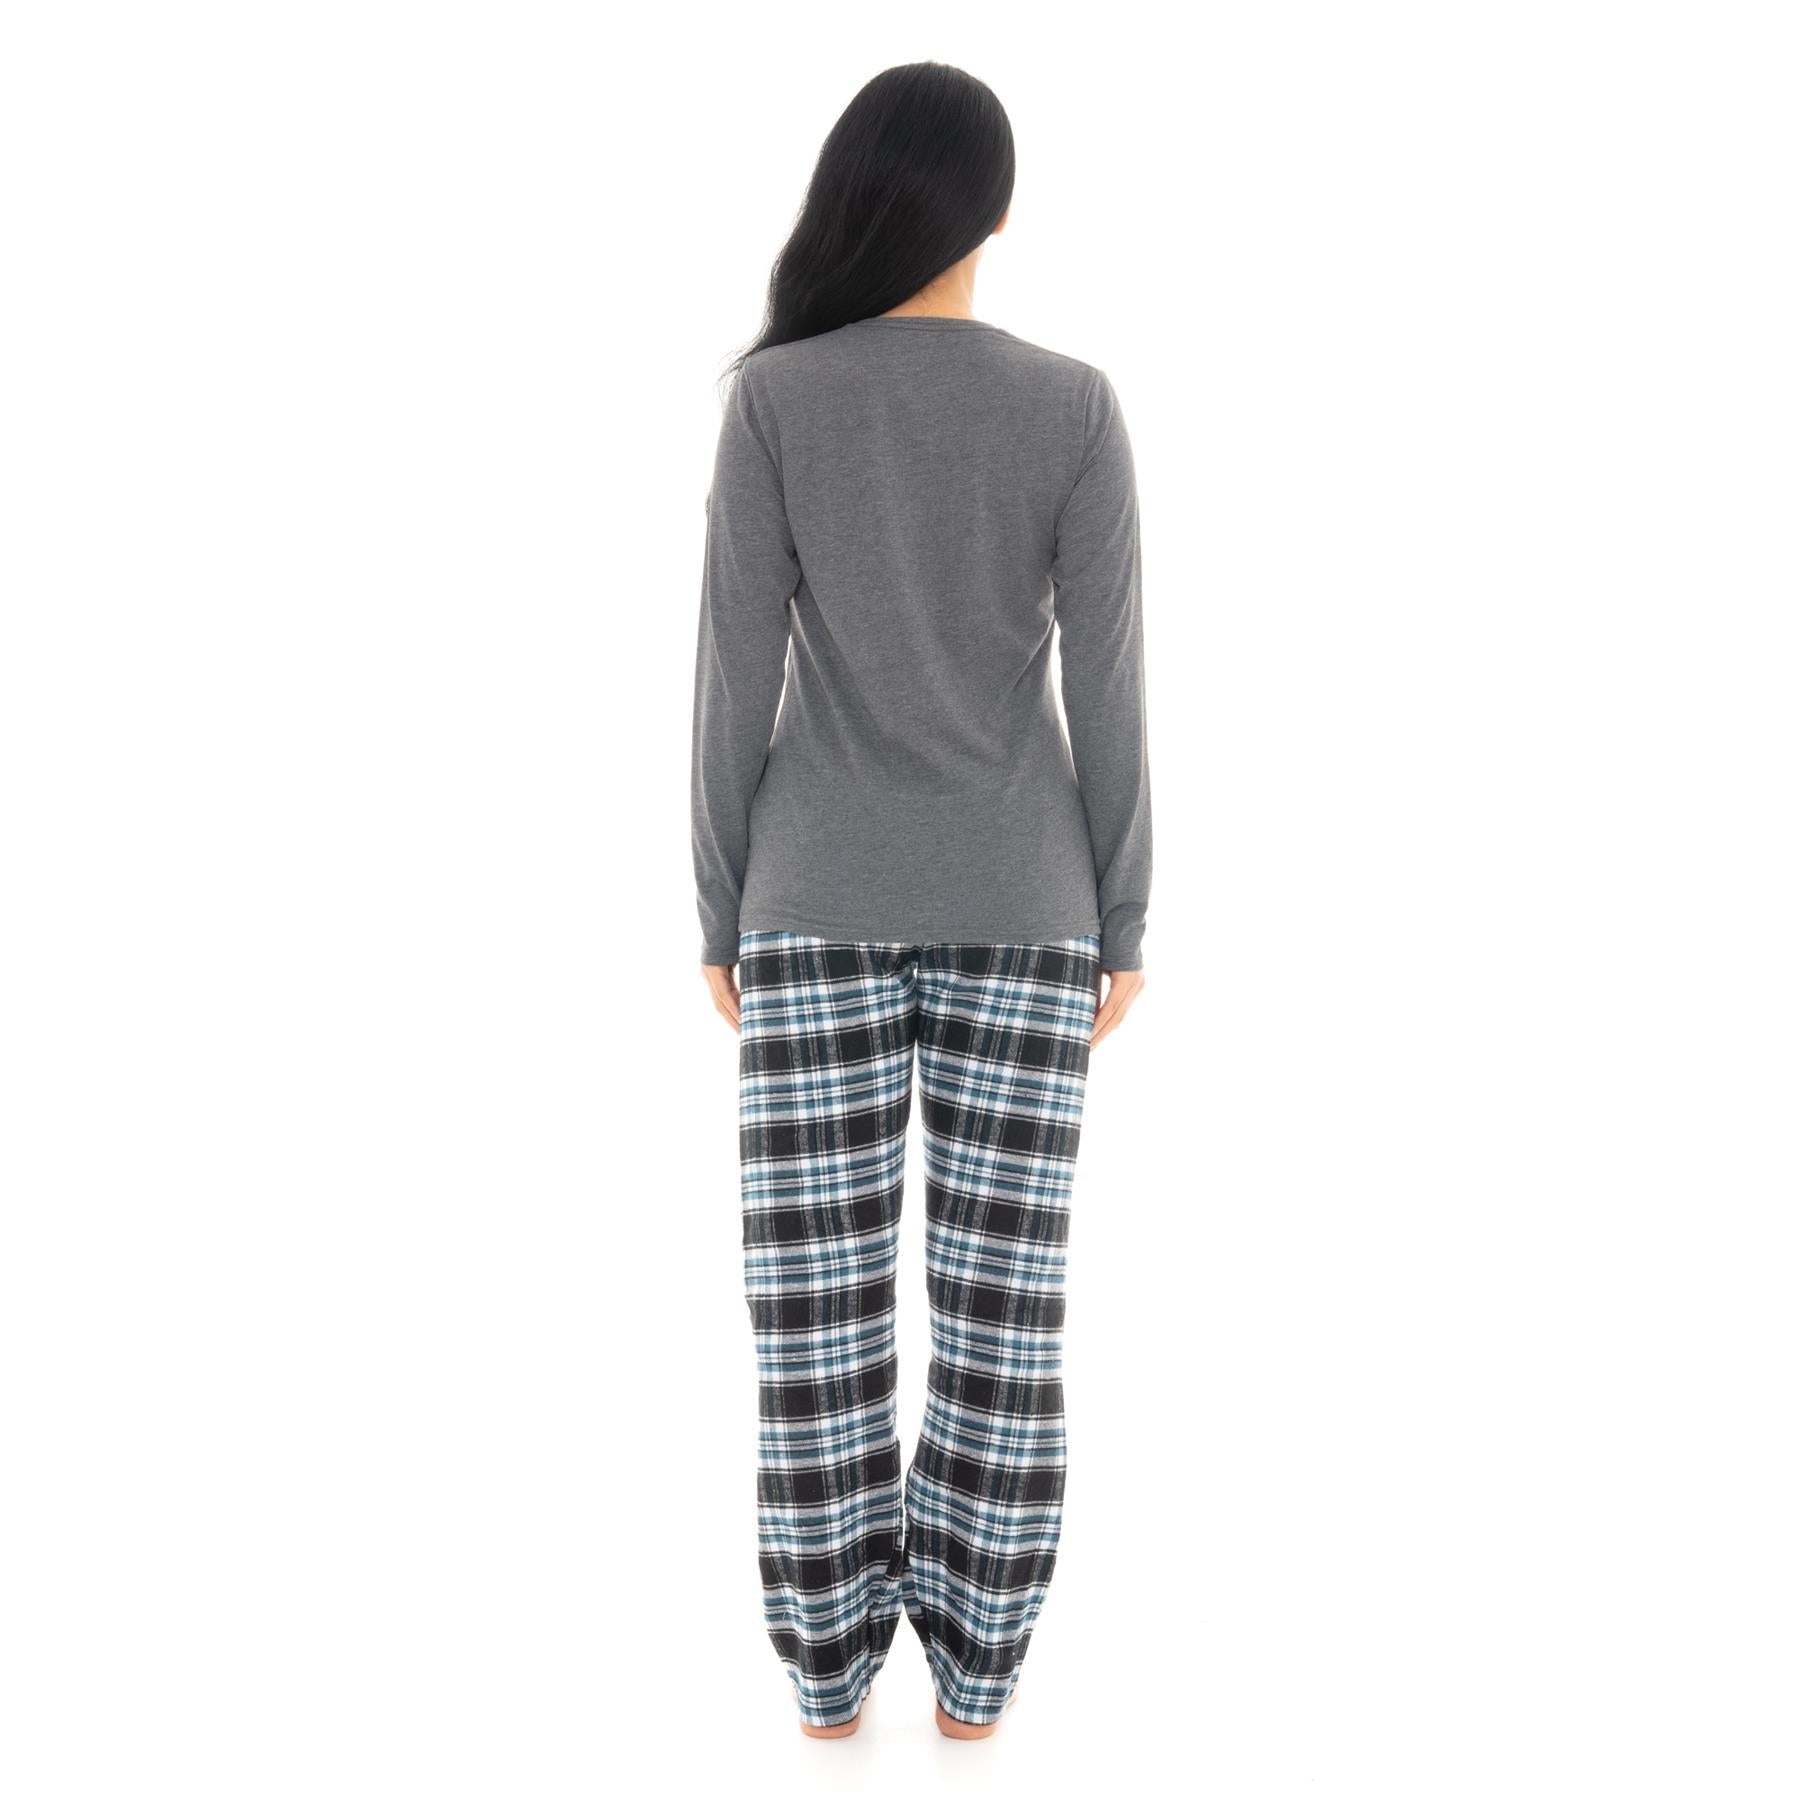 Silver & Teal Flannel Check Pyjama Set